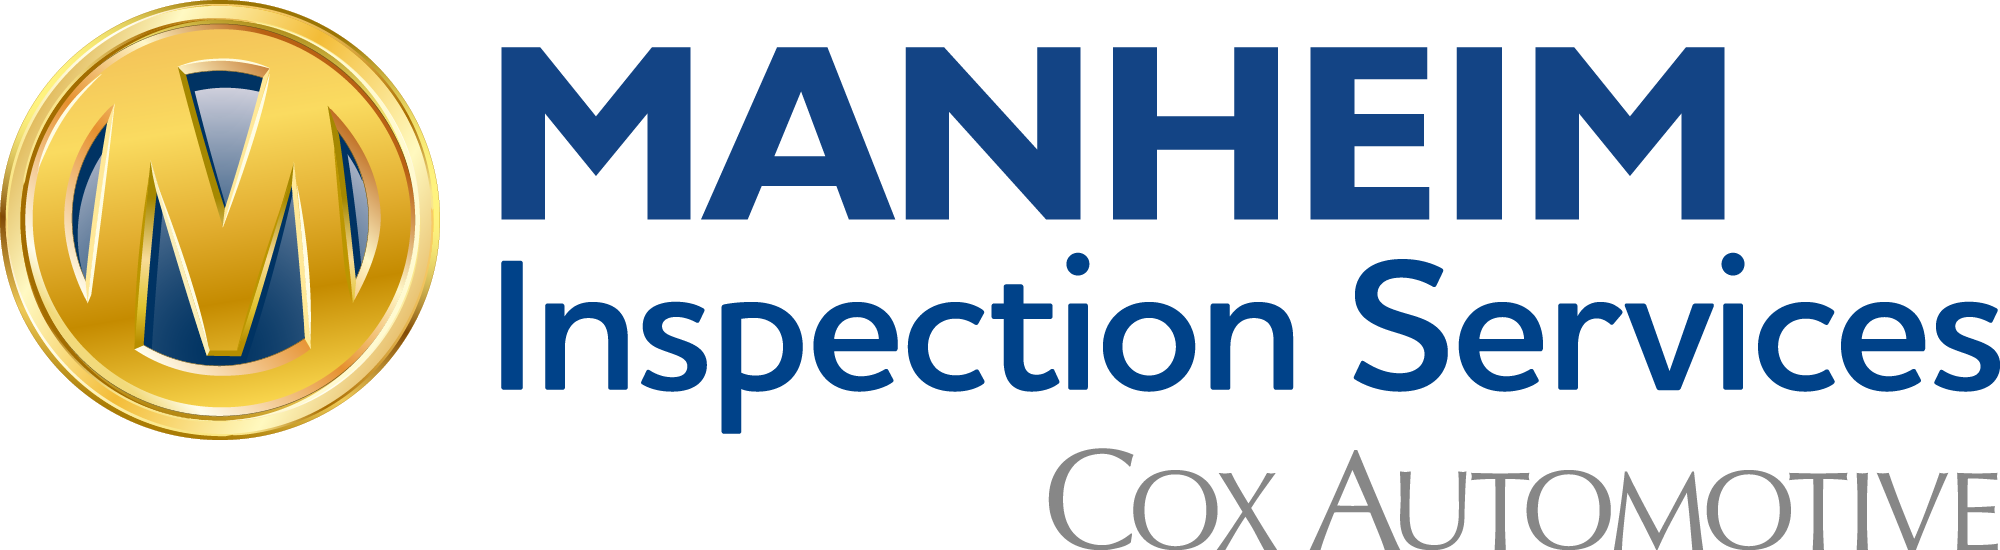 Manheim Inspection Services